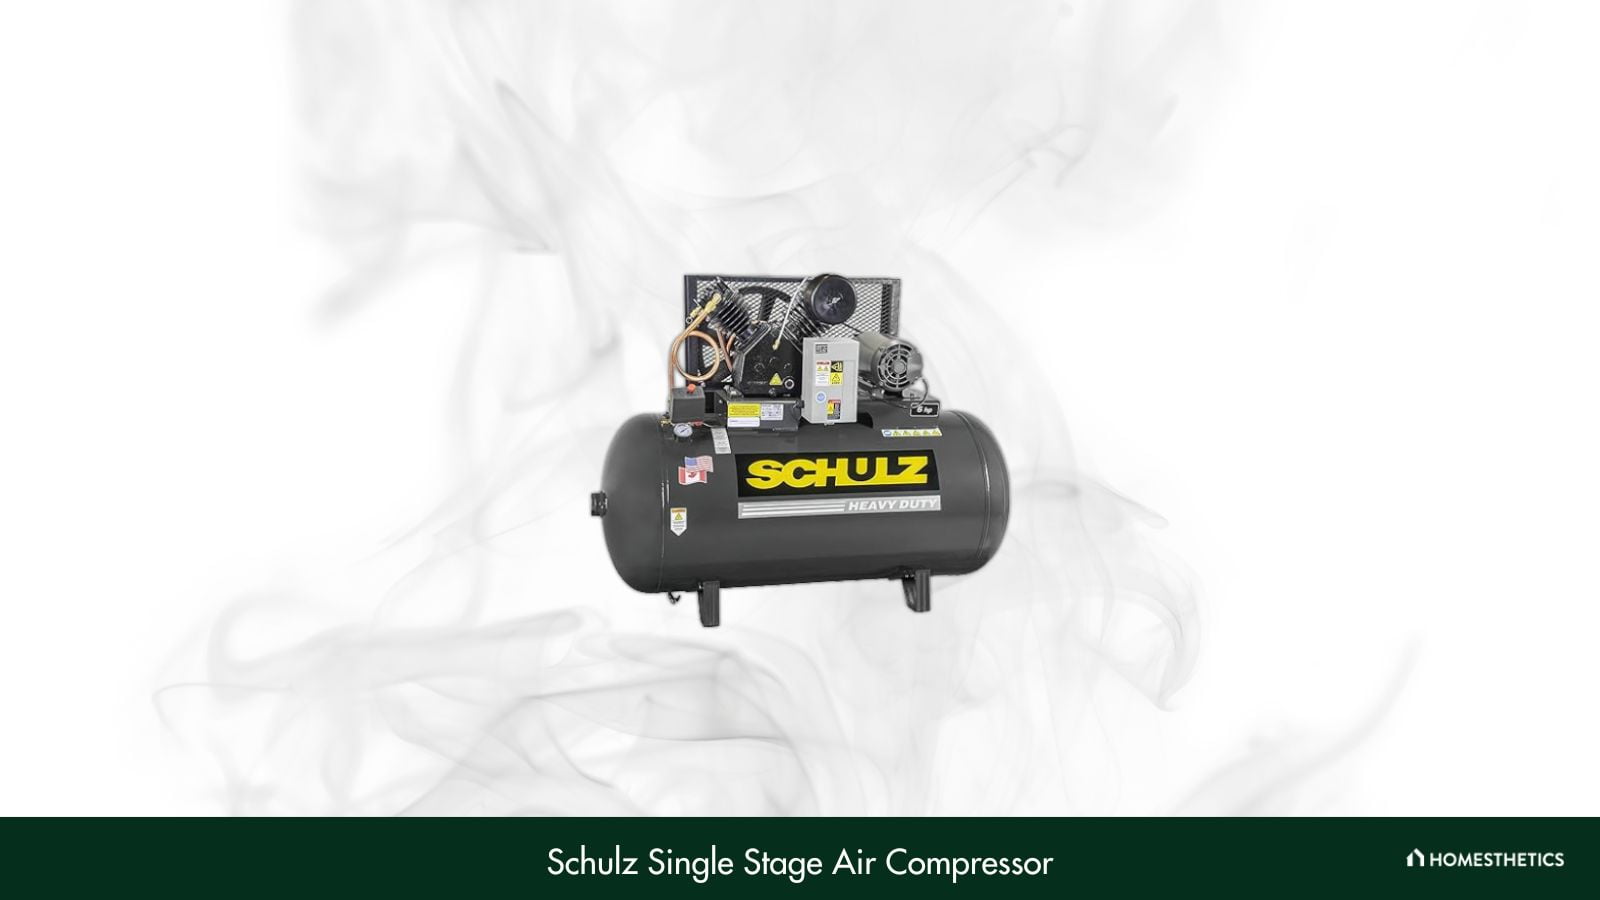 Schulz 580HV20X 1 Piston Air Compressor